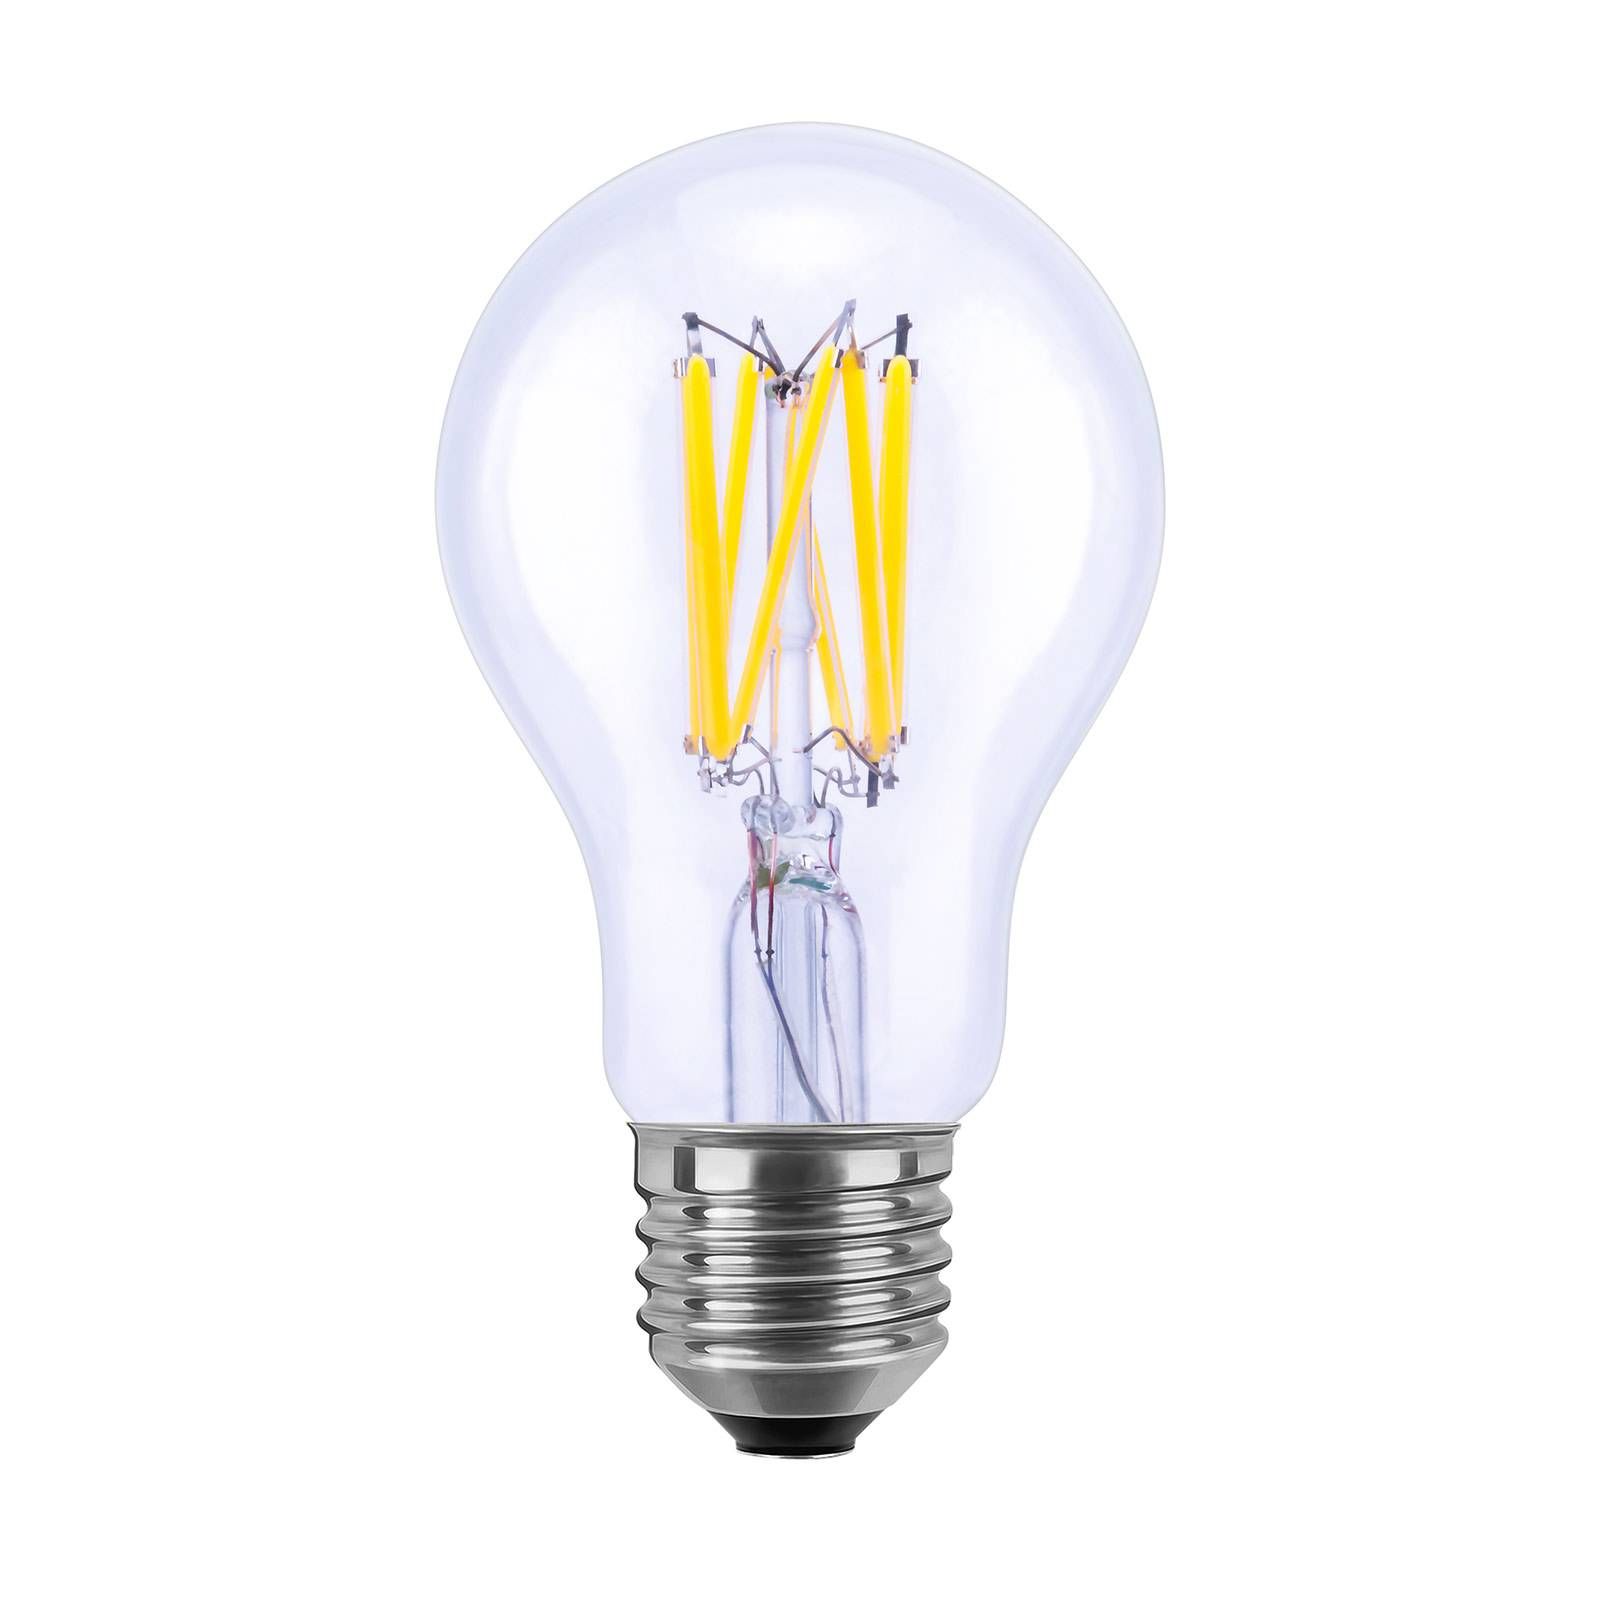 Segula SEGULA LED žiarovka High Power E27 8W, číra, sklo, kov, E27, 8W, Energialuokka: E, P: 11 cm